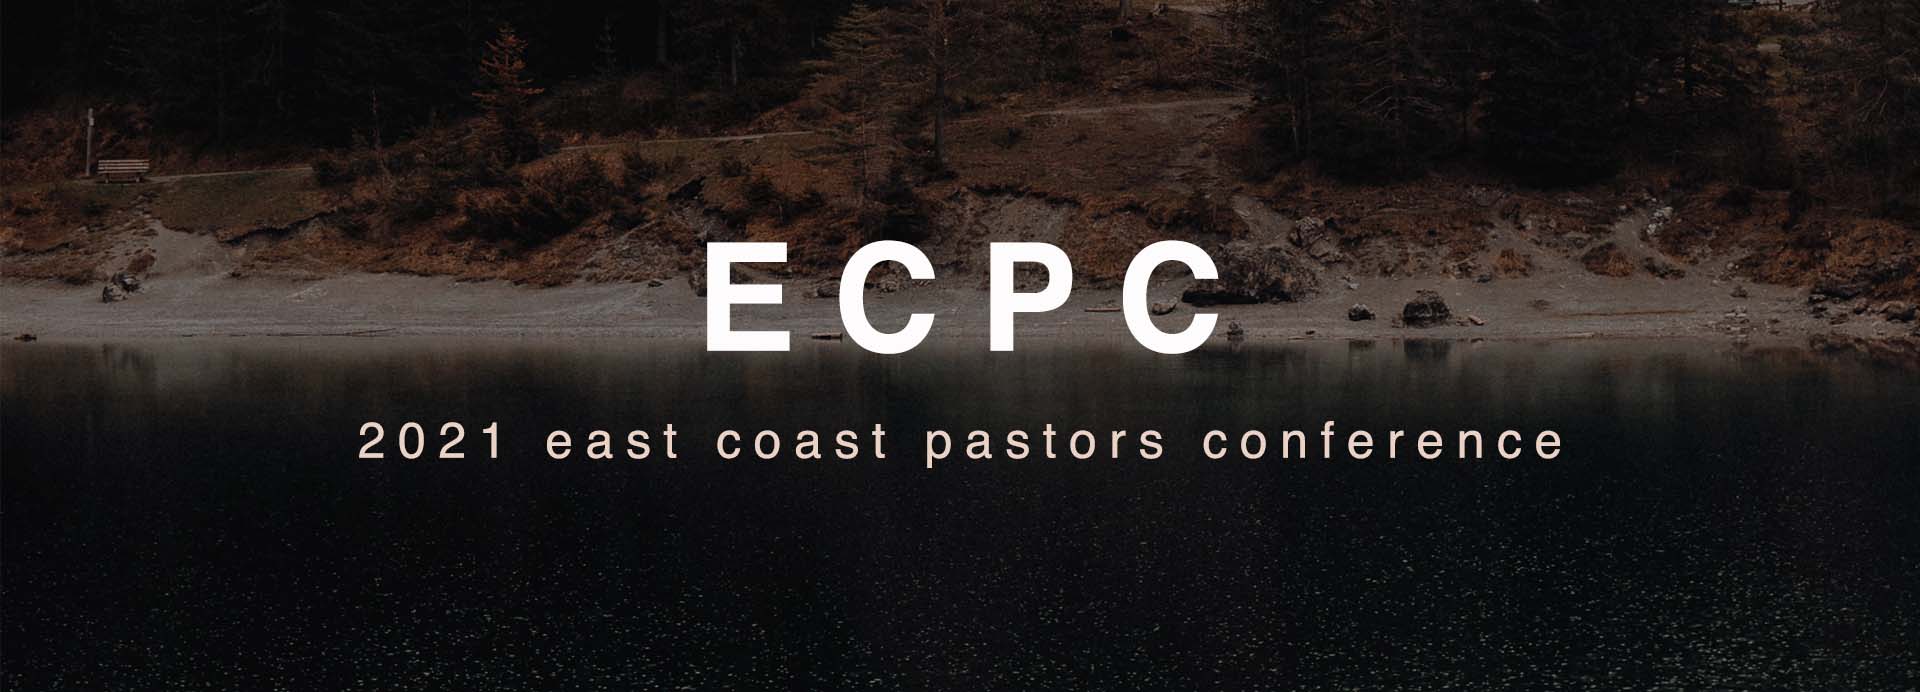 East Coast Pastors Conference 2021